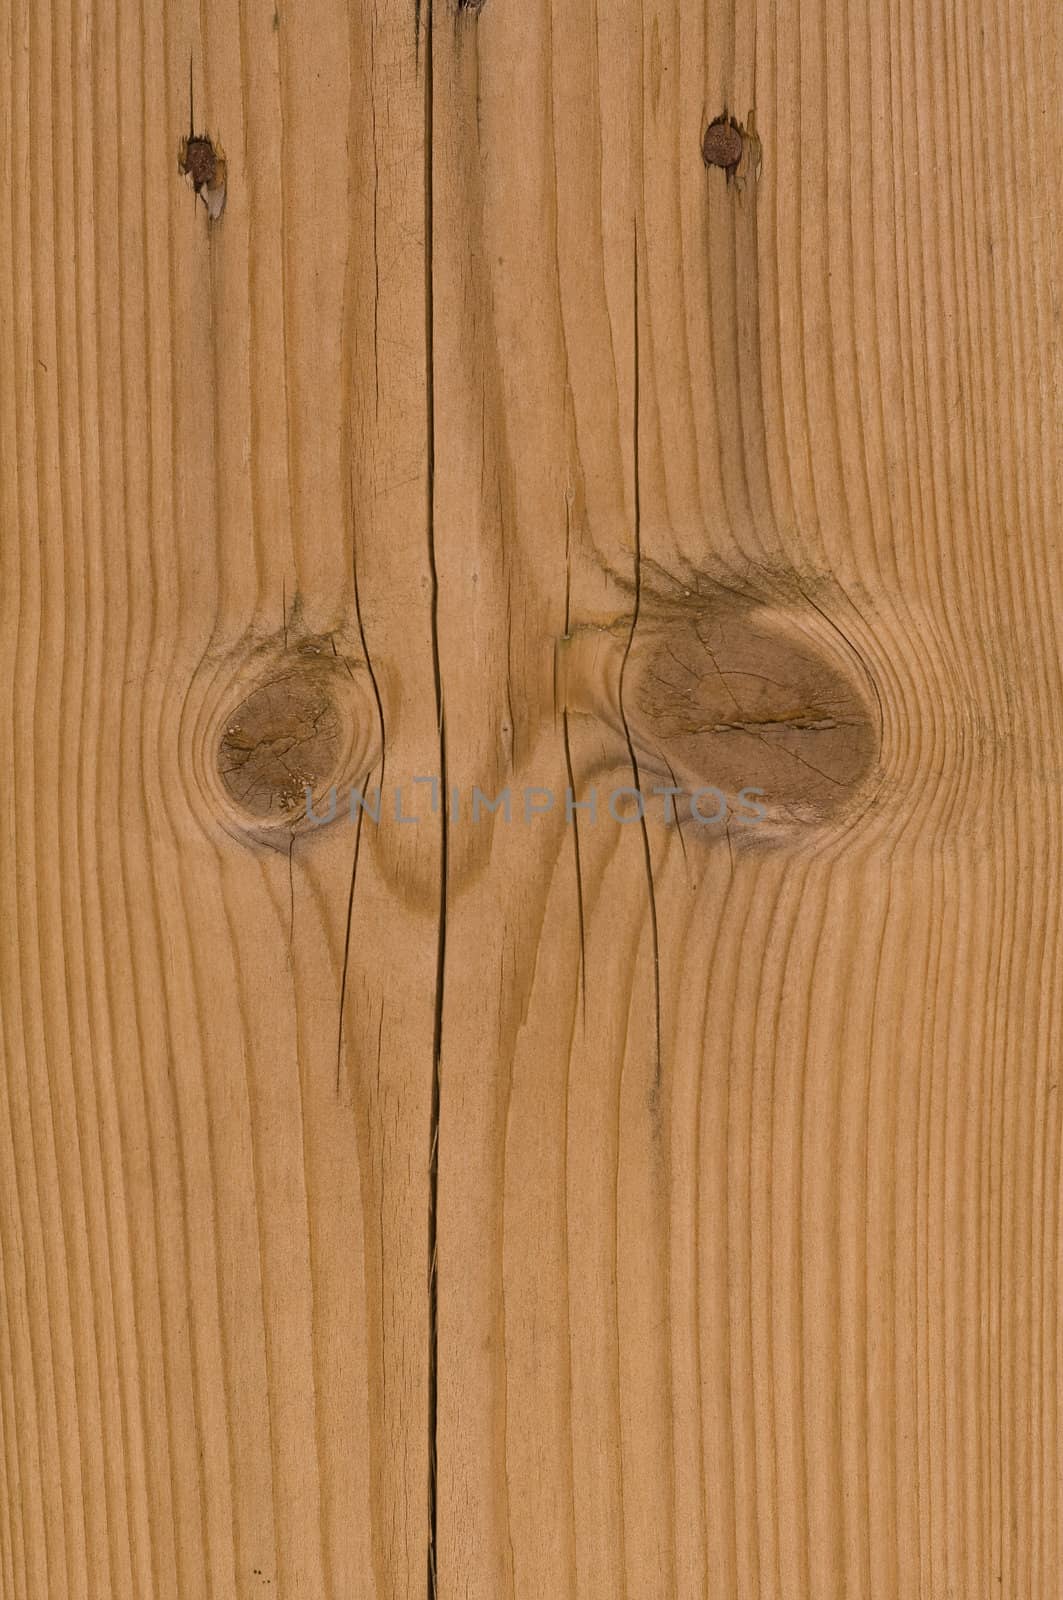 Pine woodgrain texture